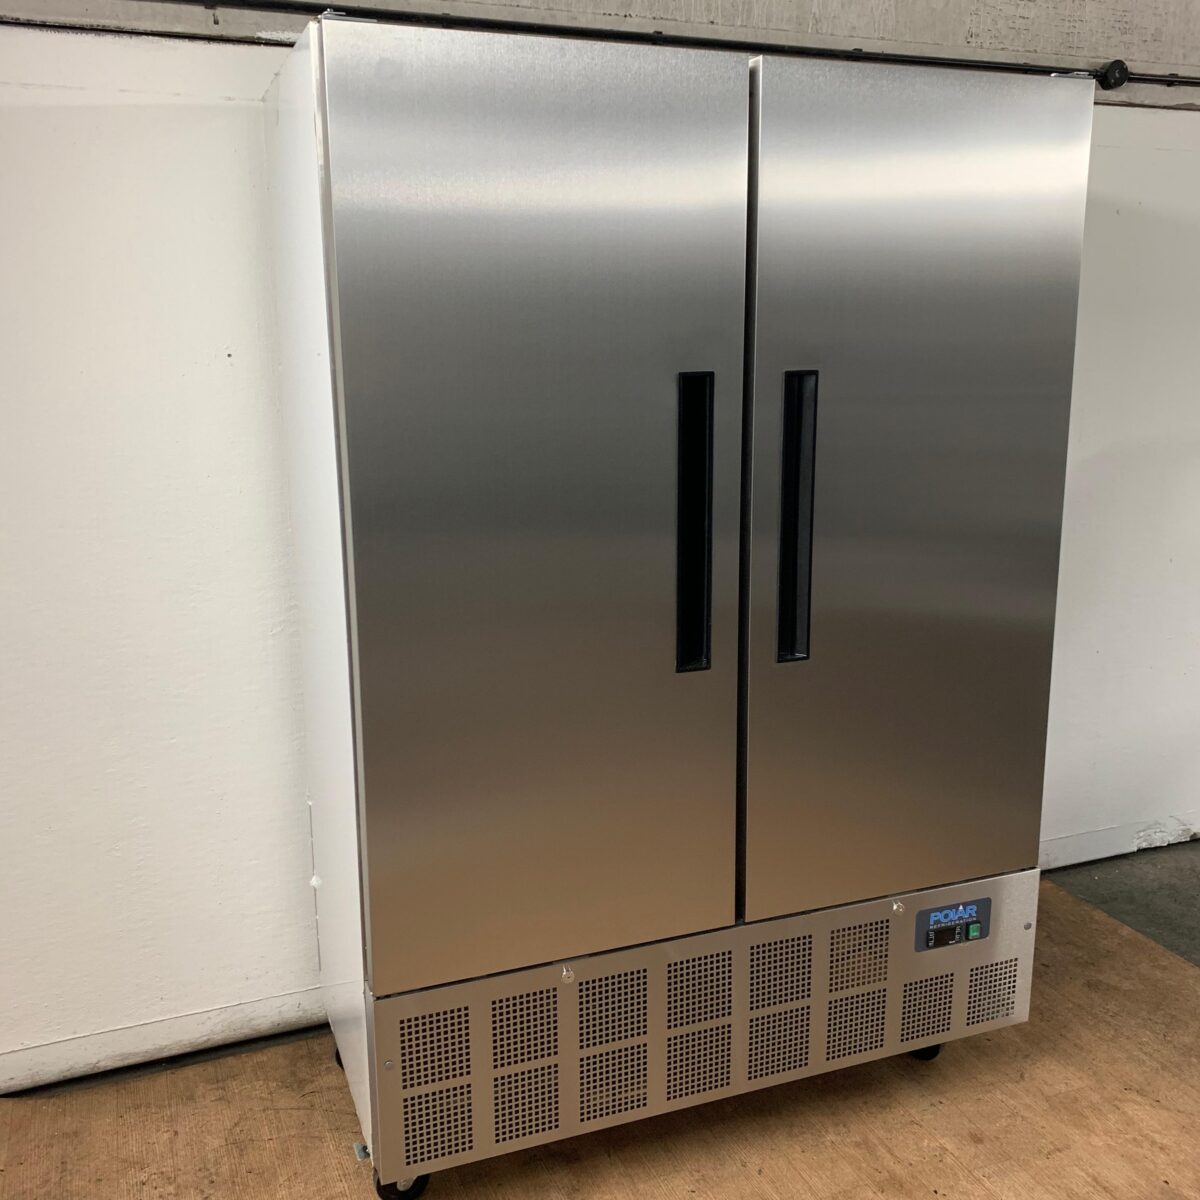 New B Grade Polar GD879 Stainless steel double door fridge 134cmW x 71cmD x 200cmH